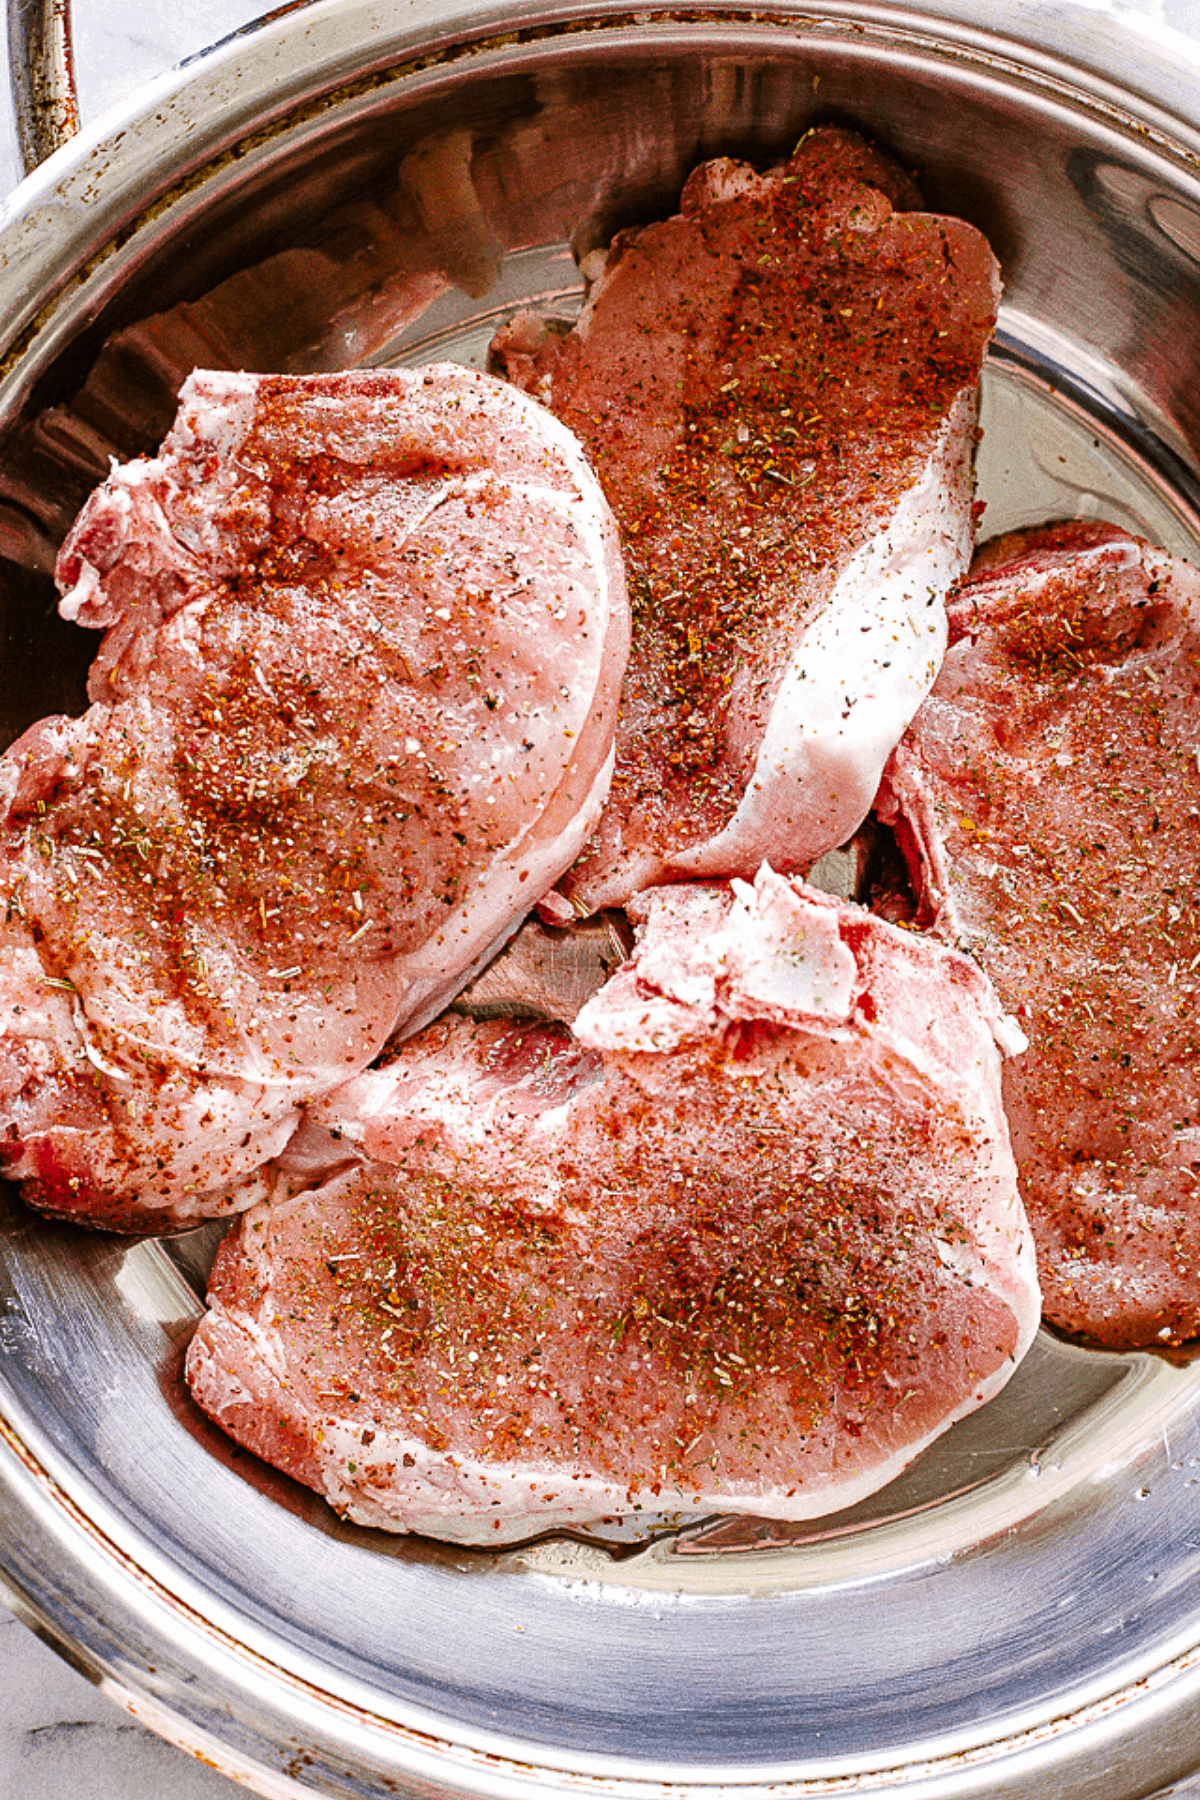 Raw pork chops sprinkled with seasoning, in a skillet.